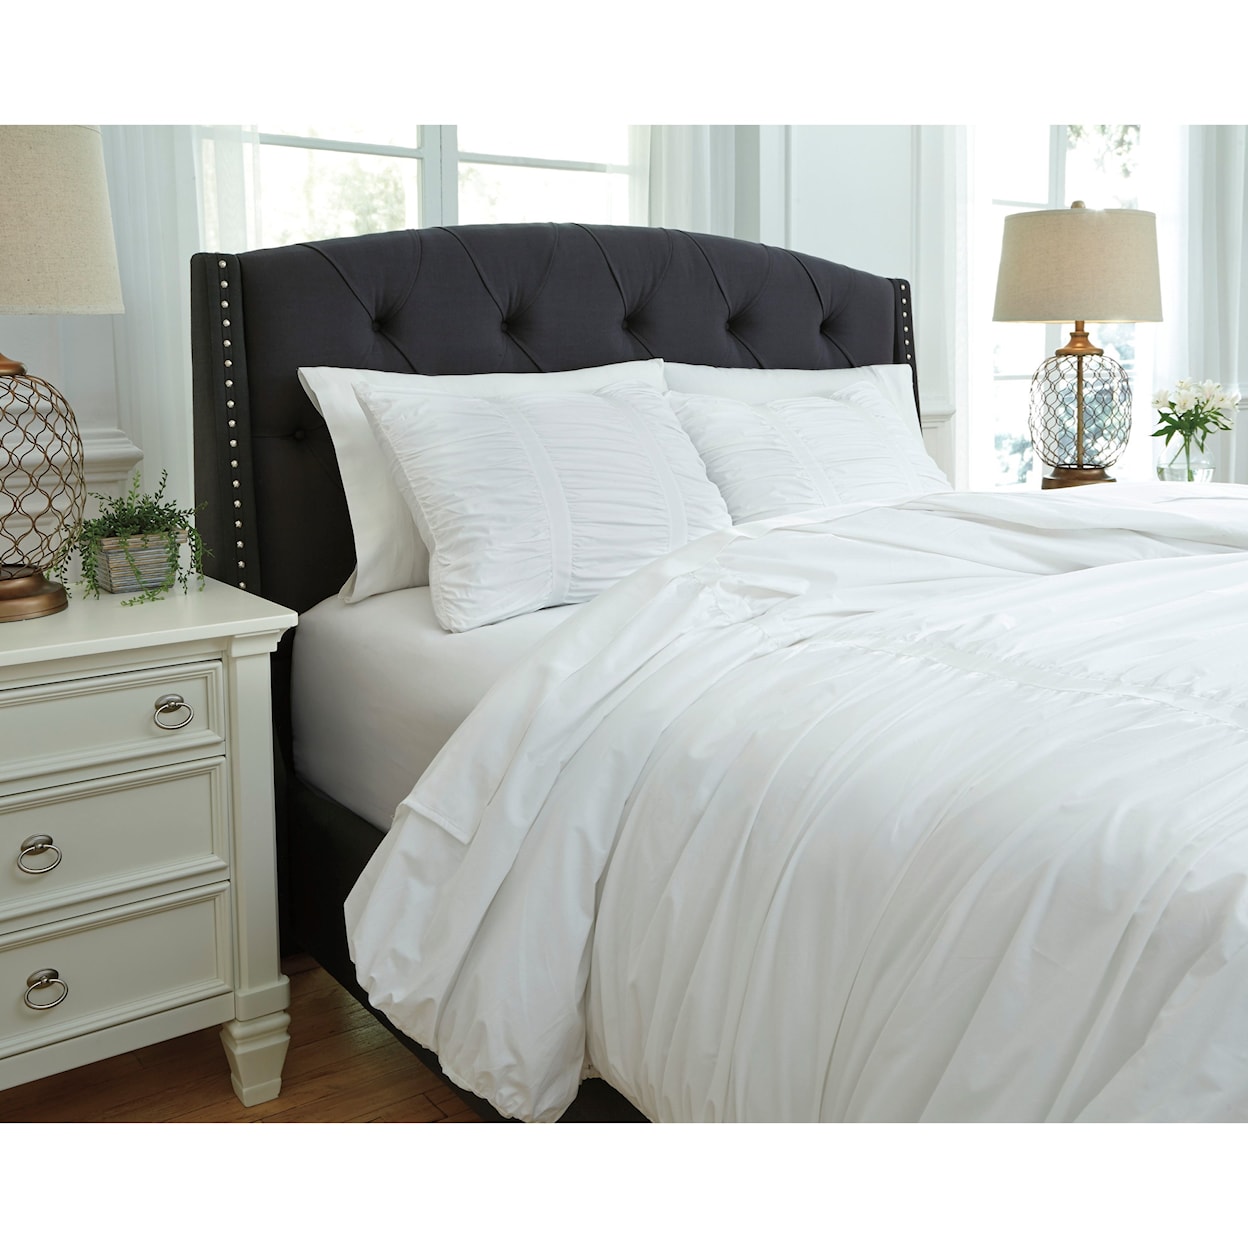 Signature Design by Ashley Furniture Bedding Sets King Limera White Duvet Cover Set